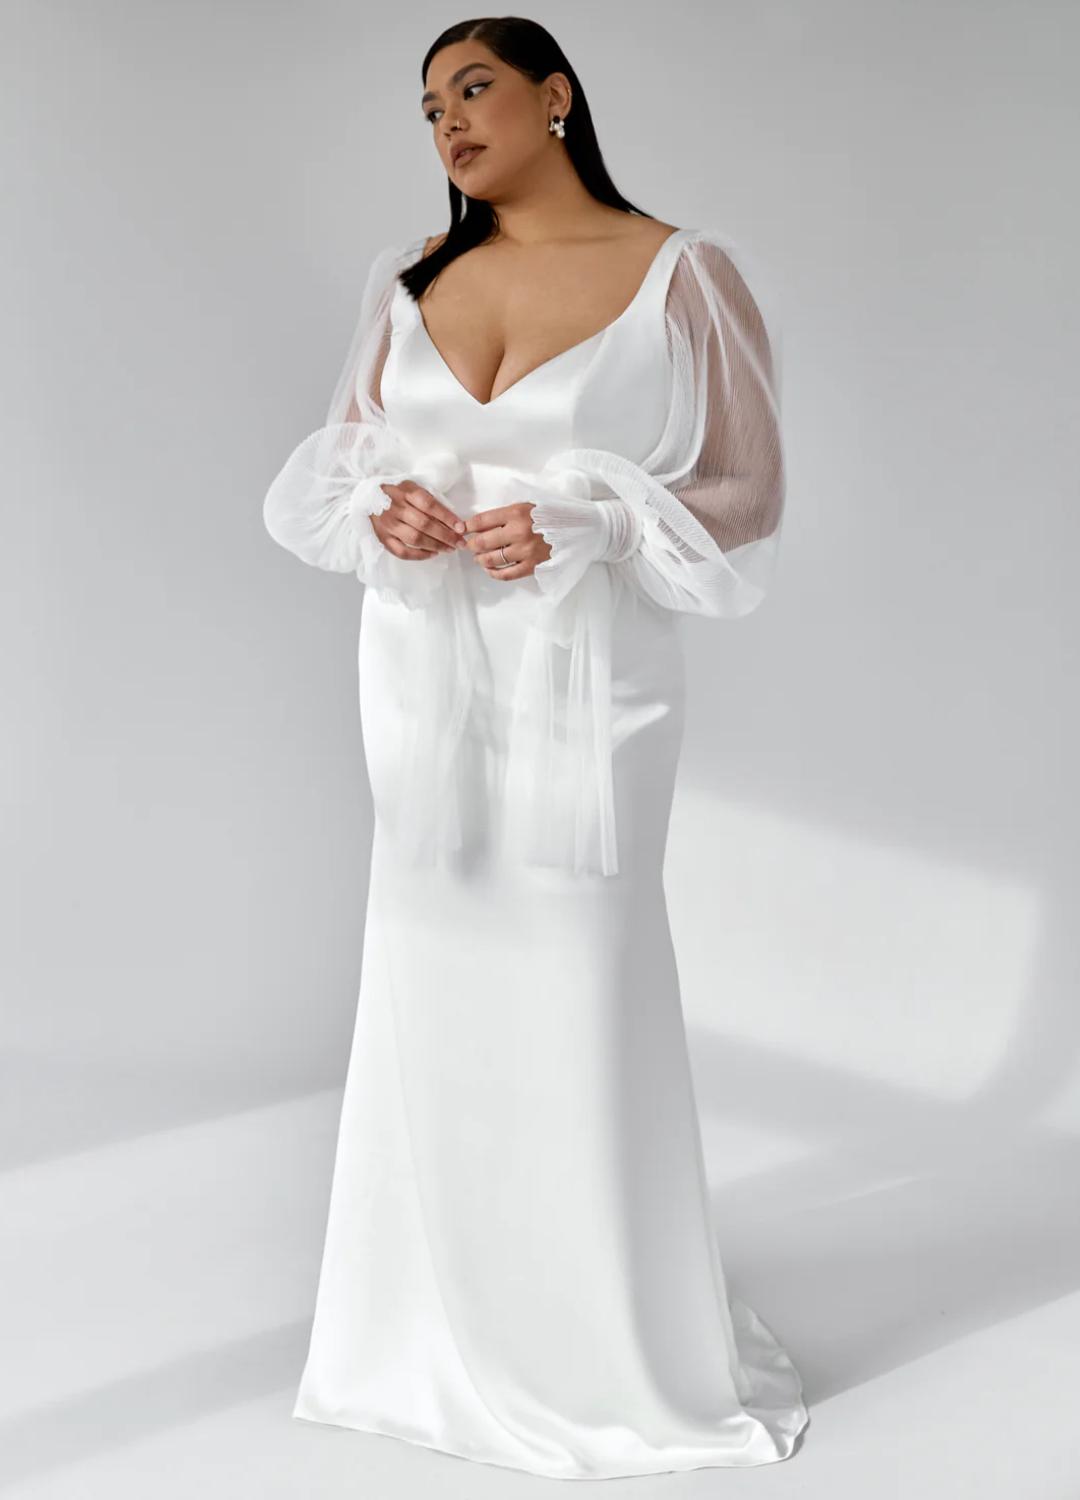 Simple Wedding Dresses: 27 Best Looks, Expert Tips / Faqs | Wedding dresses  simple, Simple bridal gowns, Wedding dresses